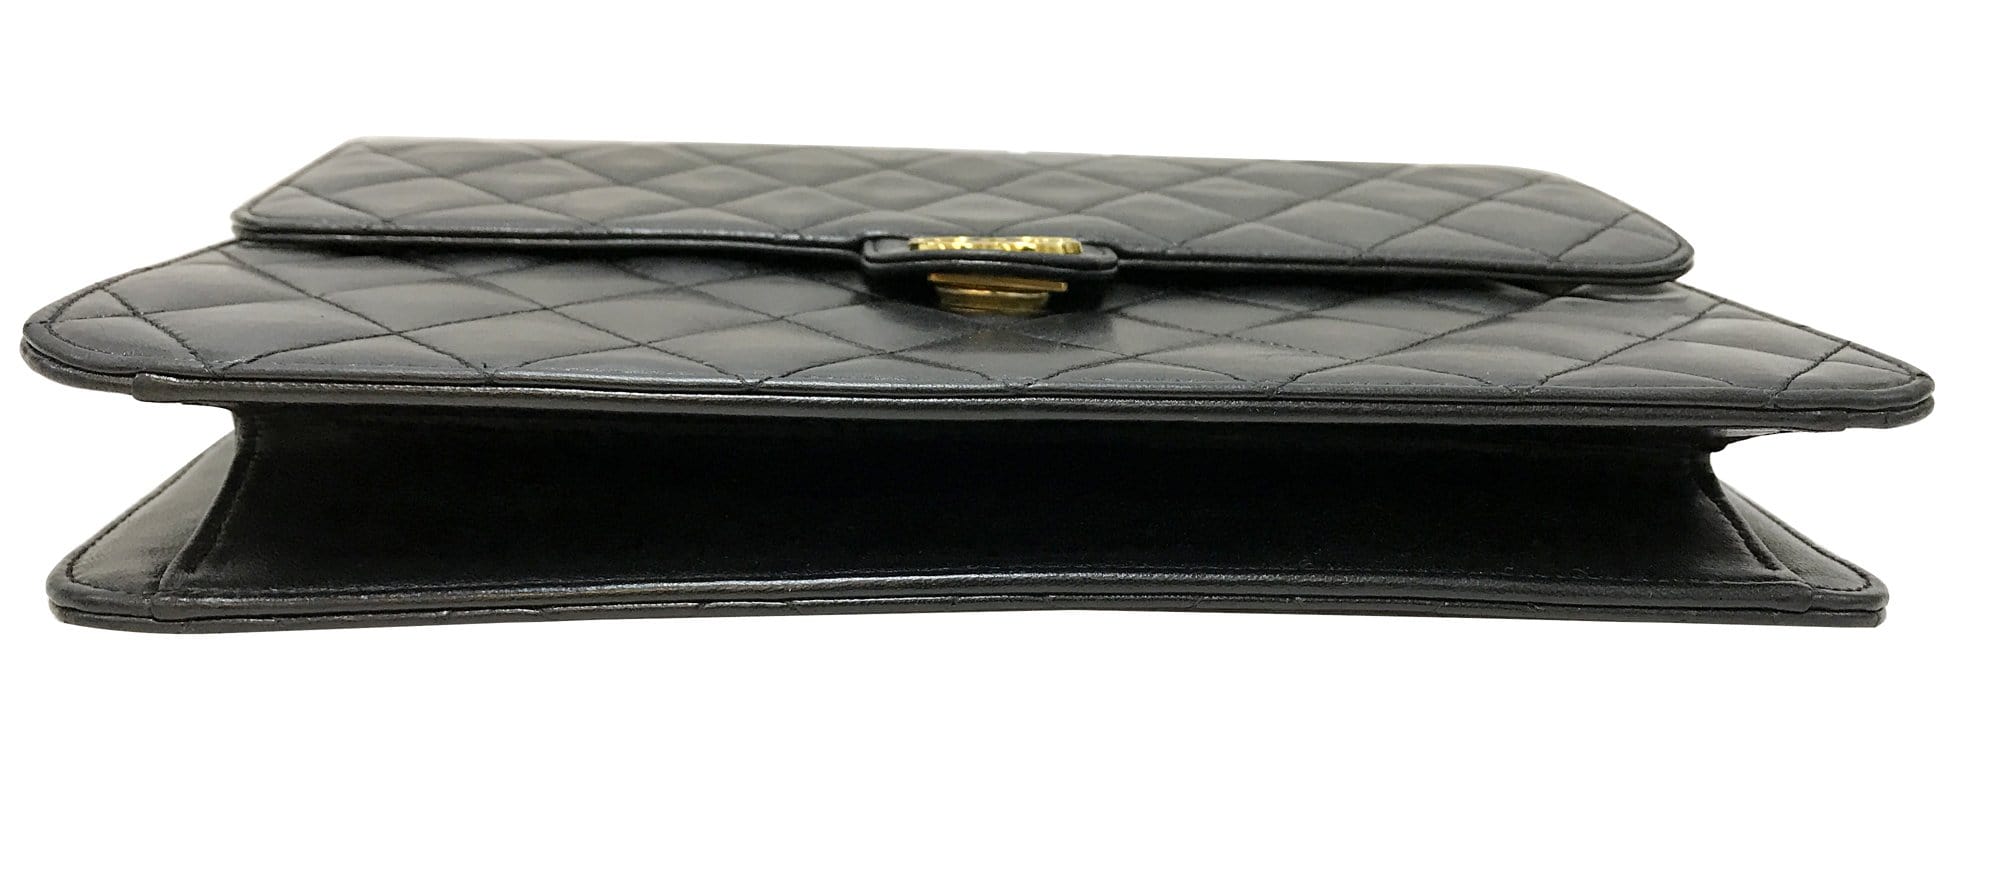 Handbags Chanel Chanel Matelasse Chain Shoulder Bag Lamb Skin Fringe Black Gold CC Auth hs691a